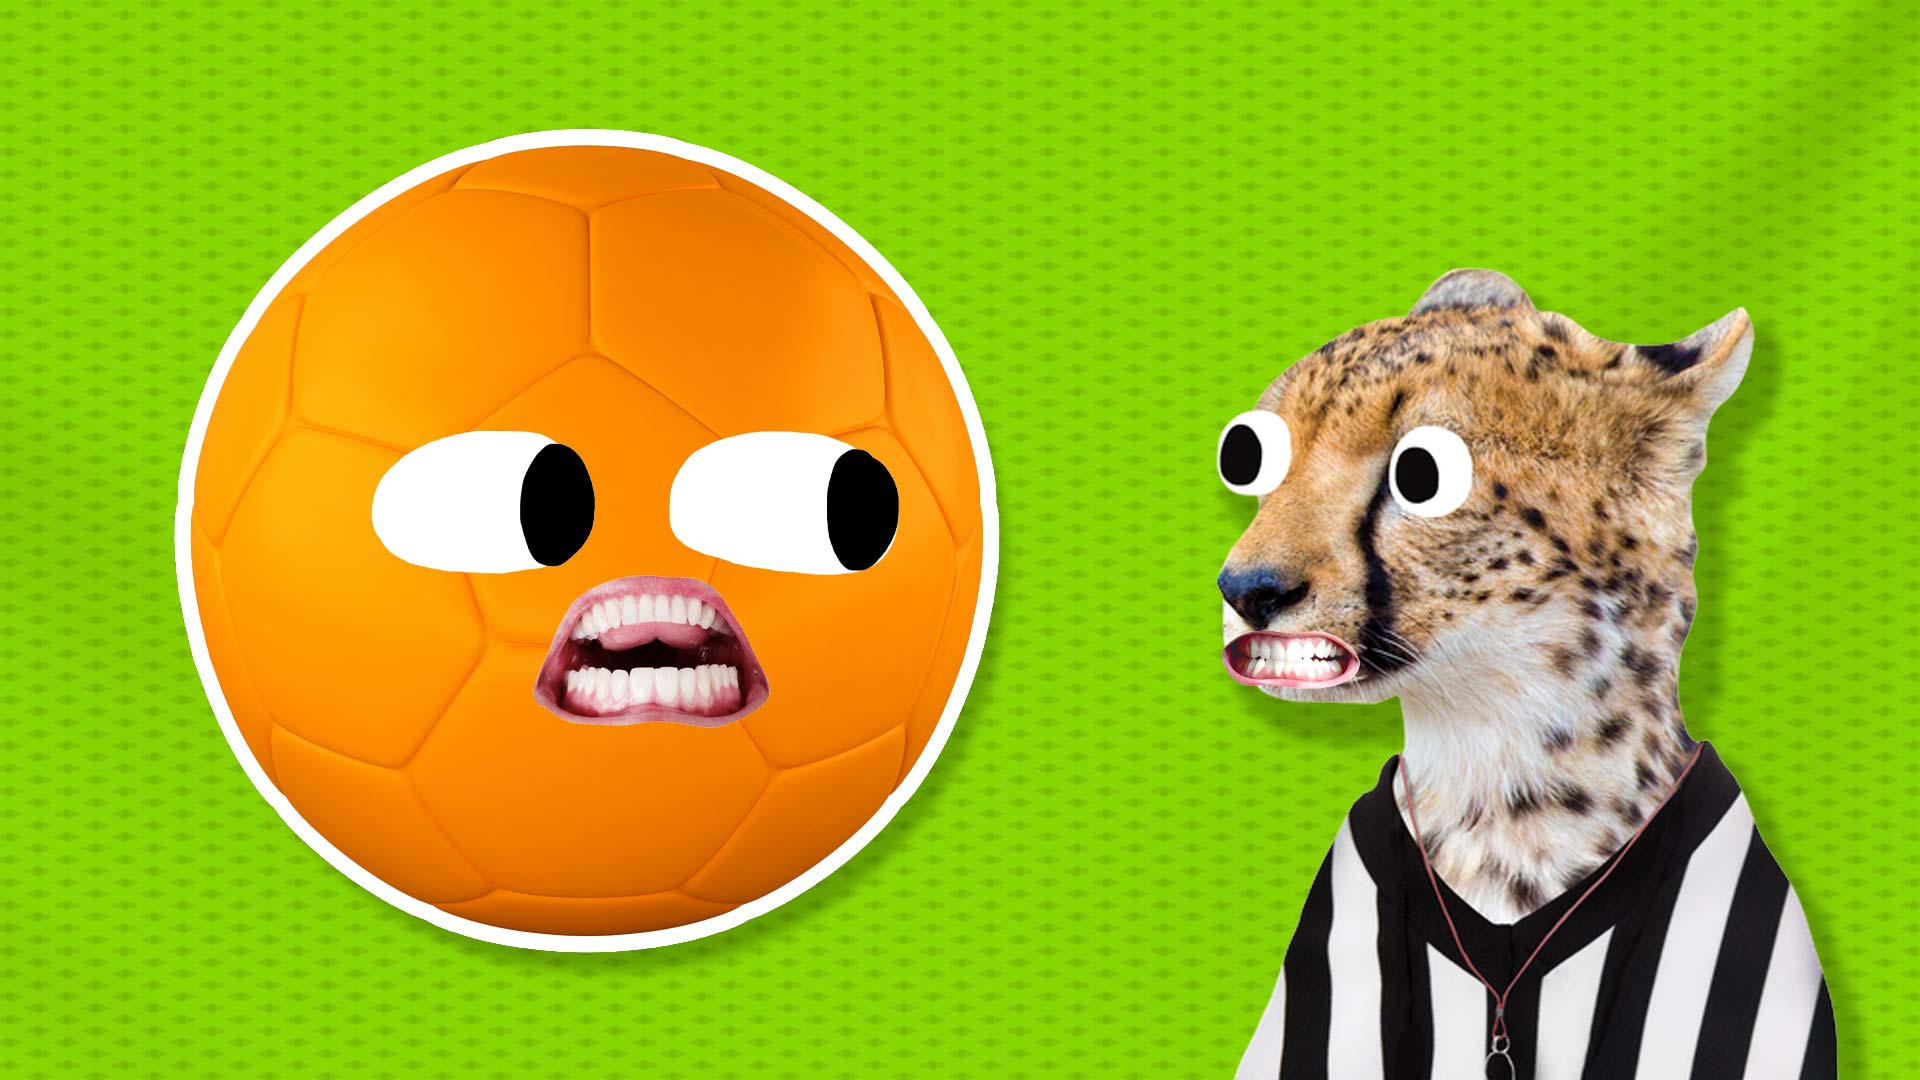 An orange football and a cheetah in a referee shirt